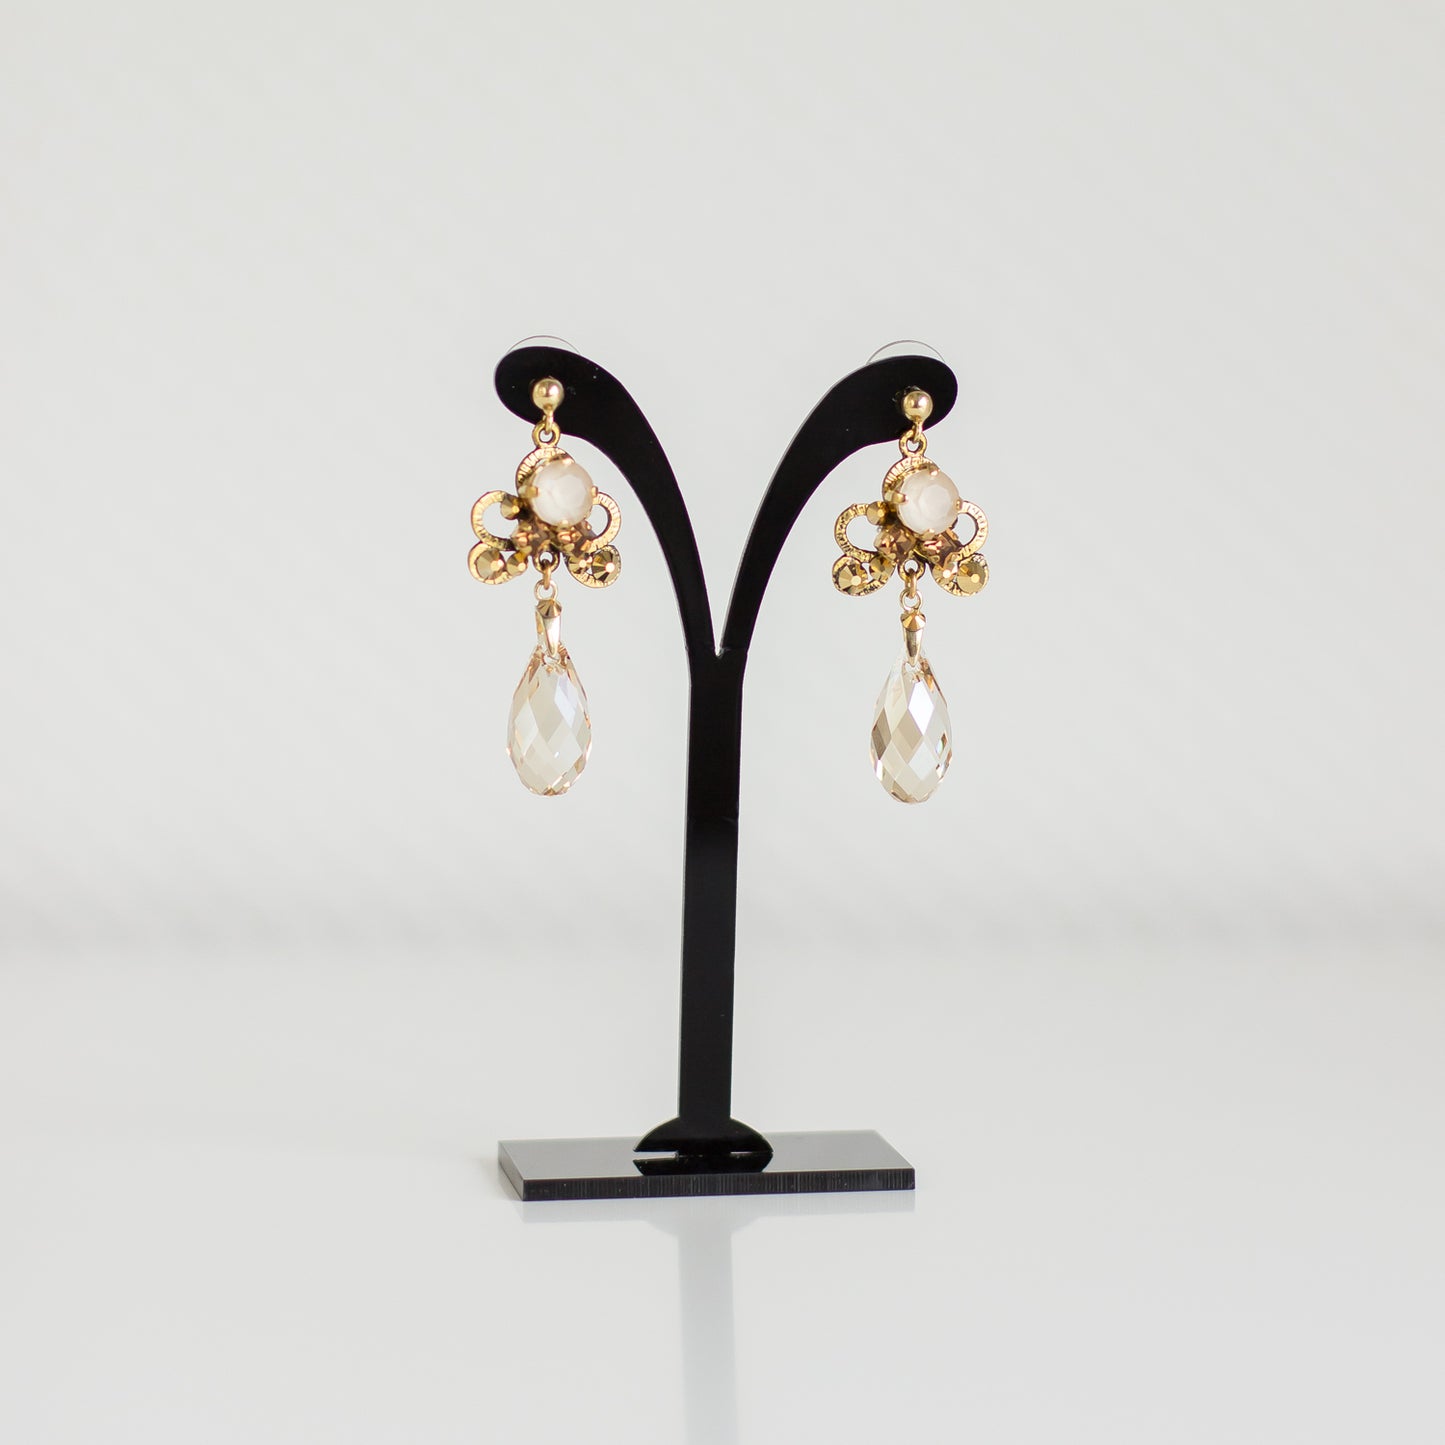 Crystal earrings. Golden shadow jewelry. Antiqued gold wedding jewelry. Rhinestone bridal earrings. Handmade Swarovski crystal accessories.